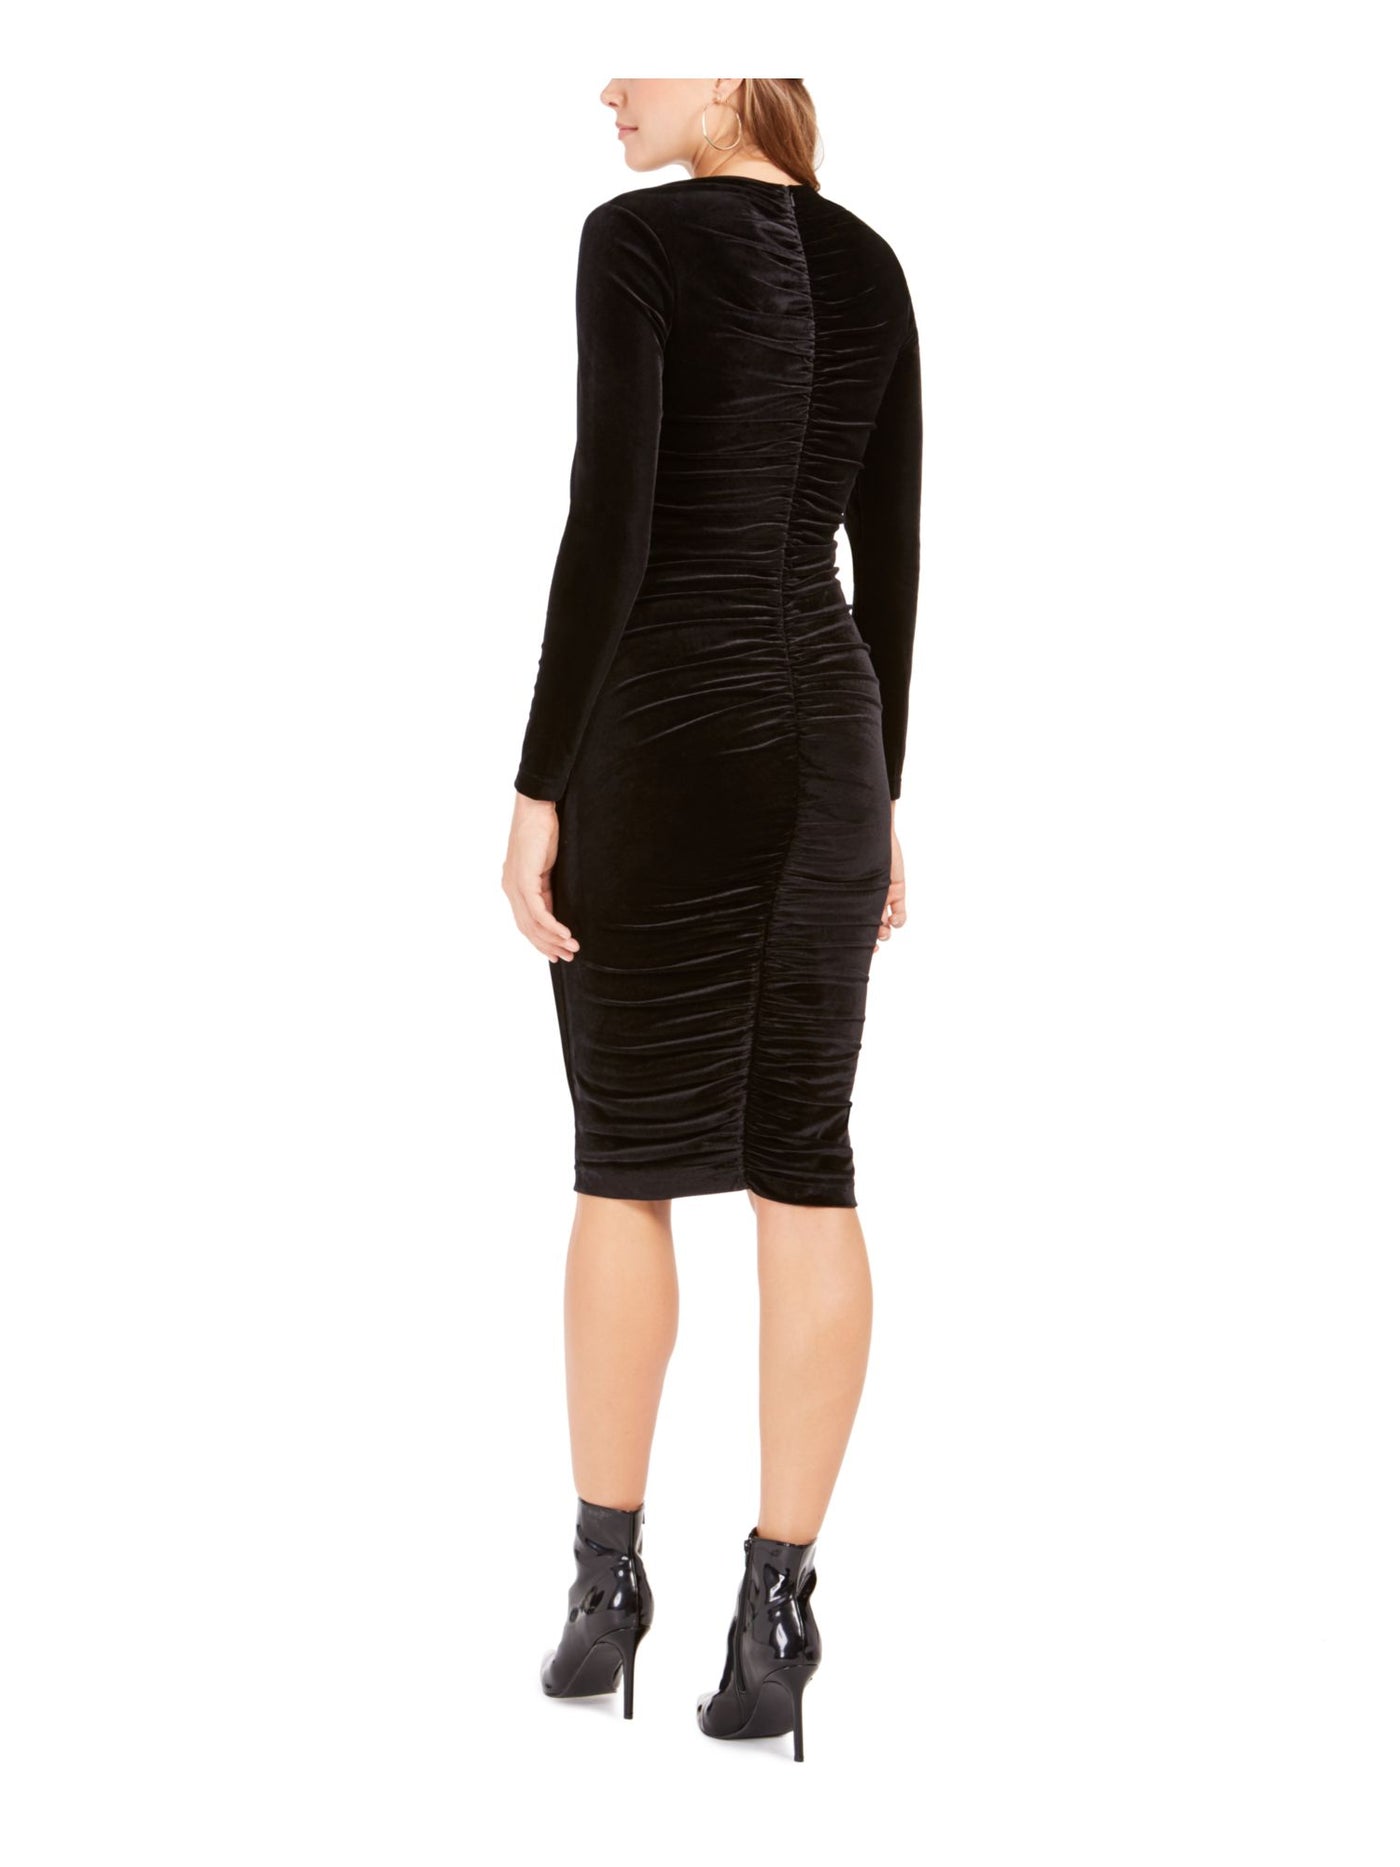 BARDOT Womens Long Sleeve Jewel Neck Knee Length Evening Body Con Dress